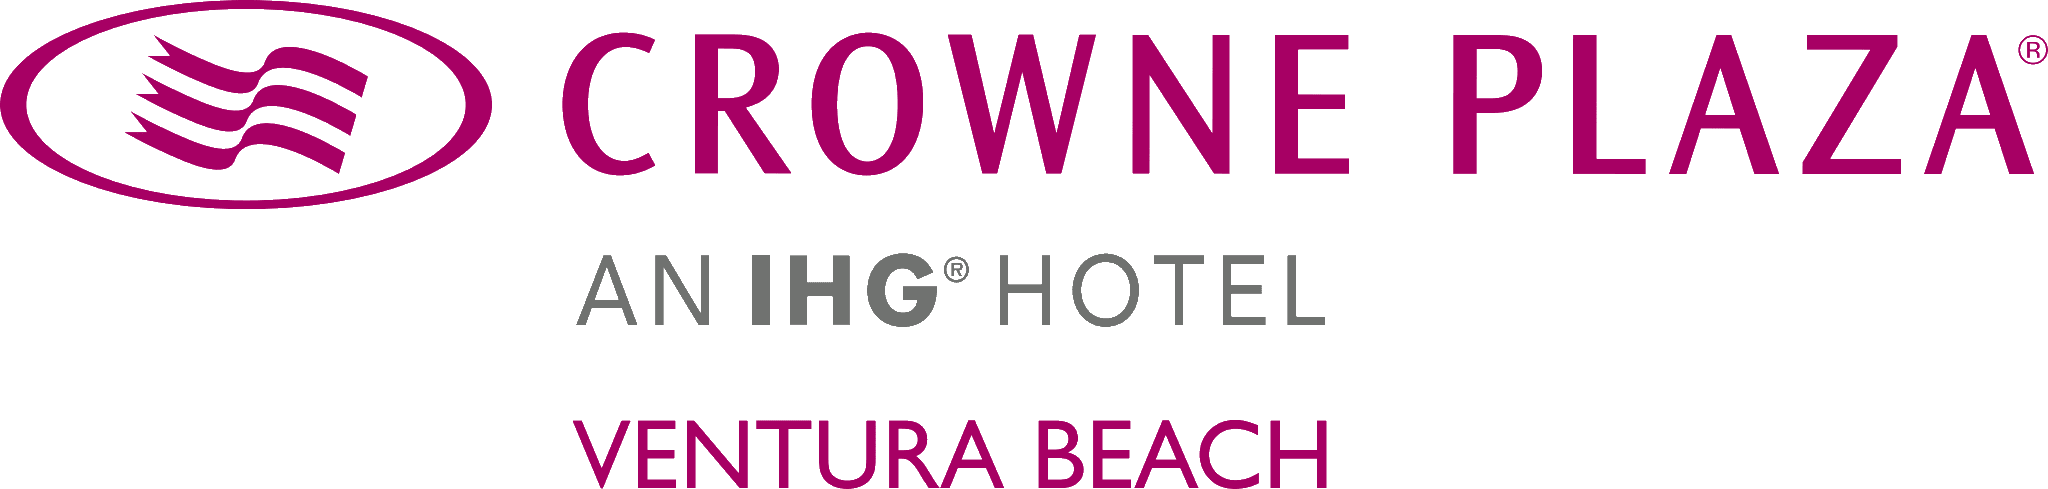 Crowne Plaza Hotel - Ballroom logo